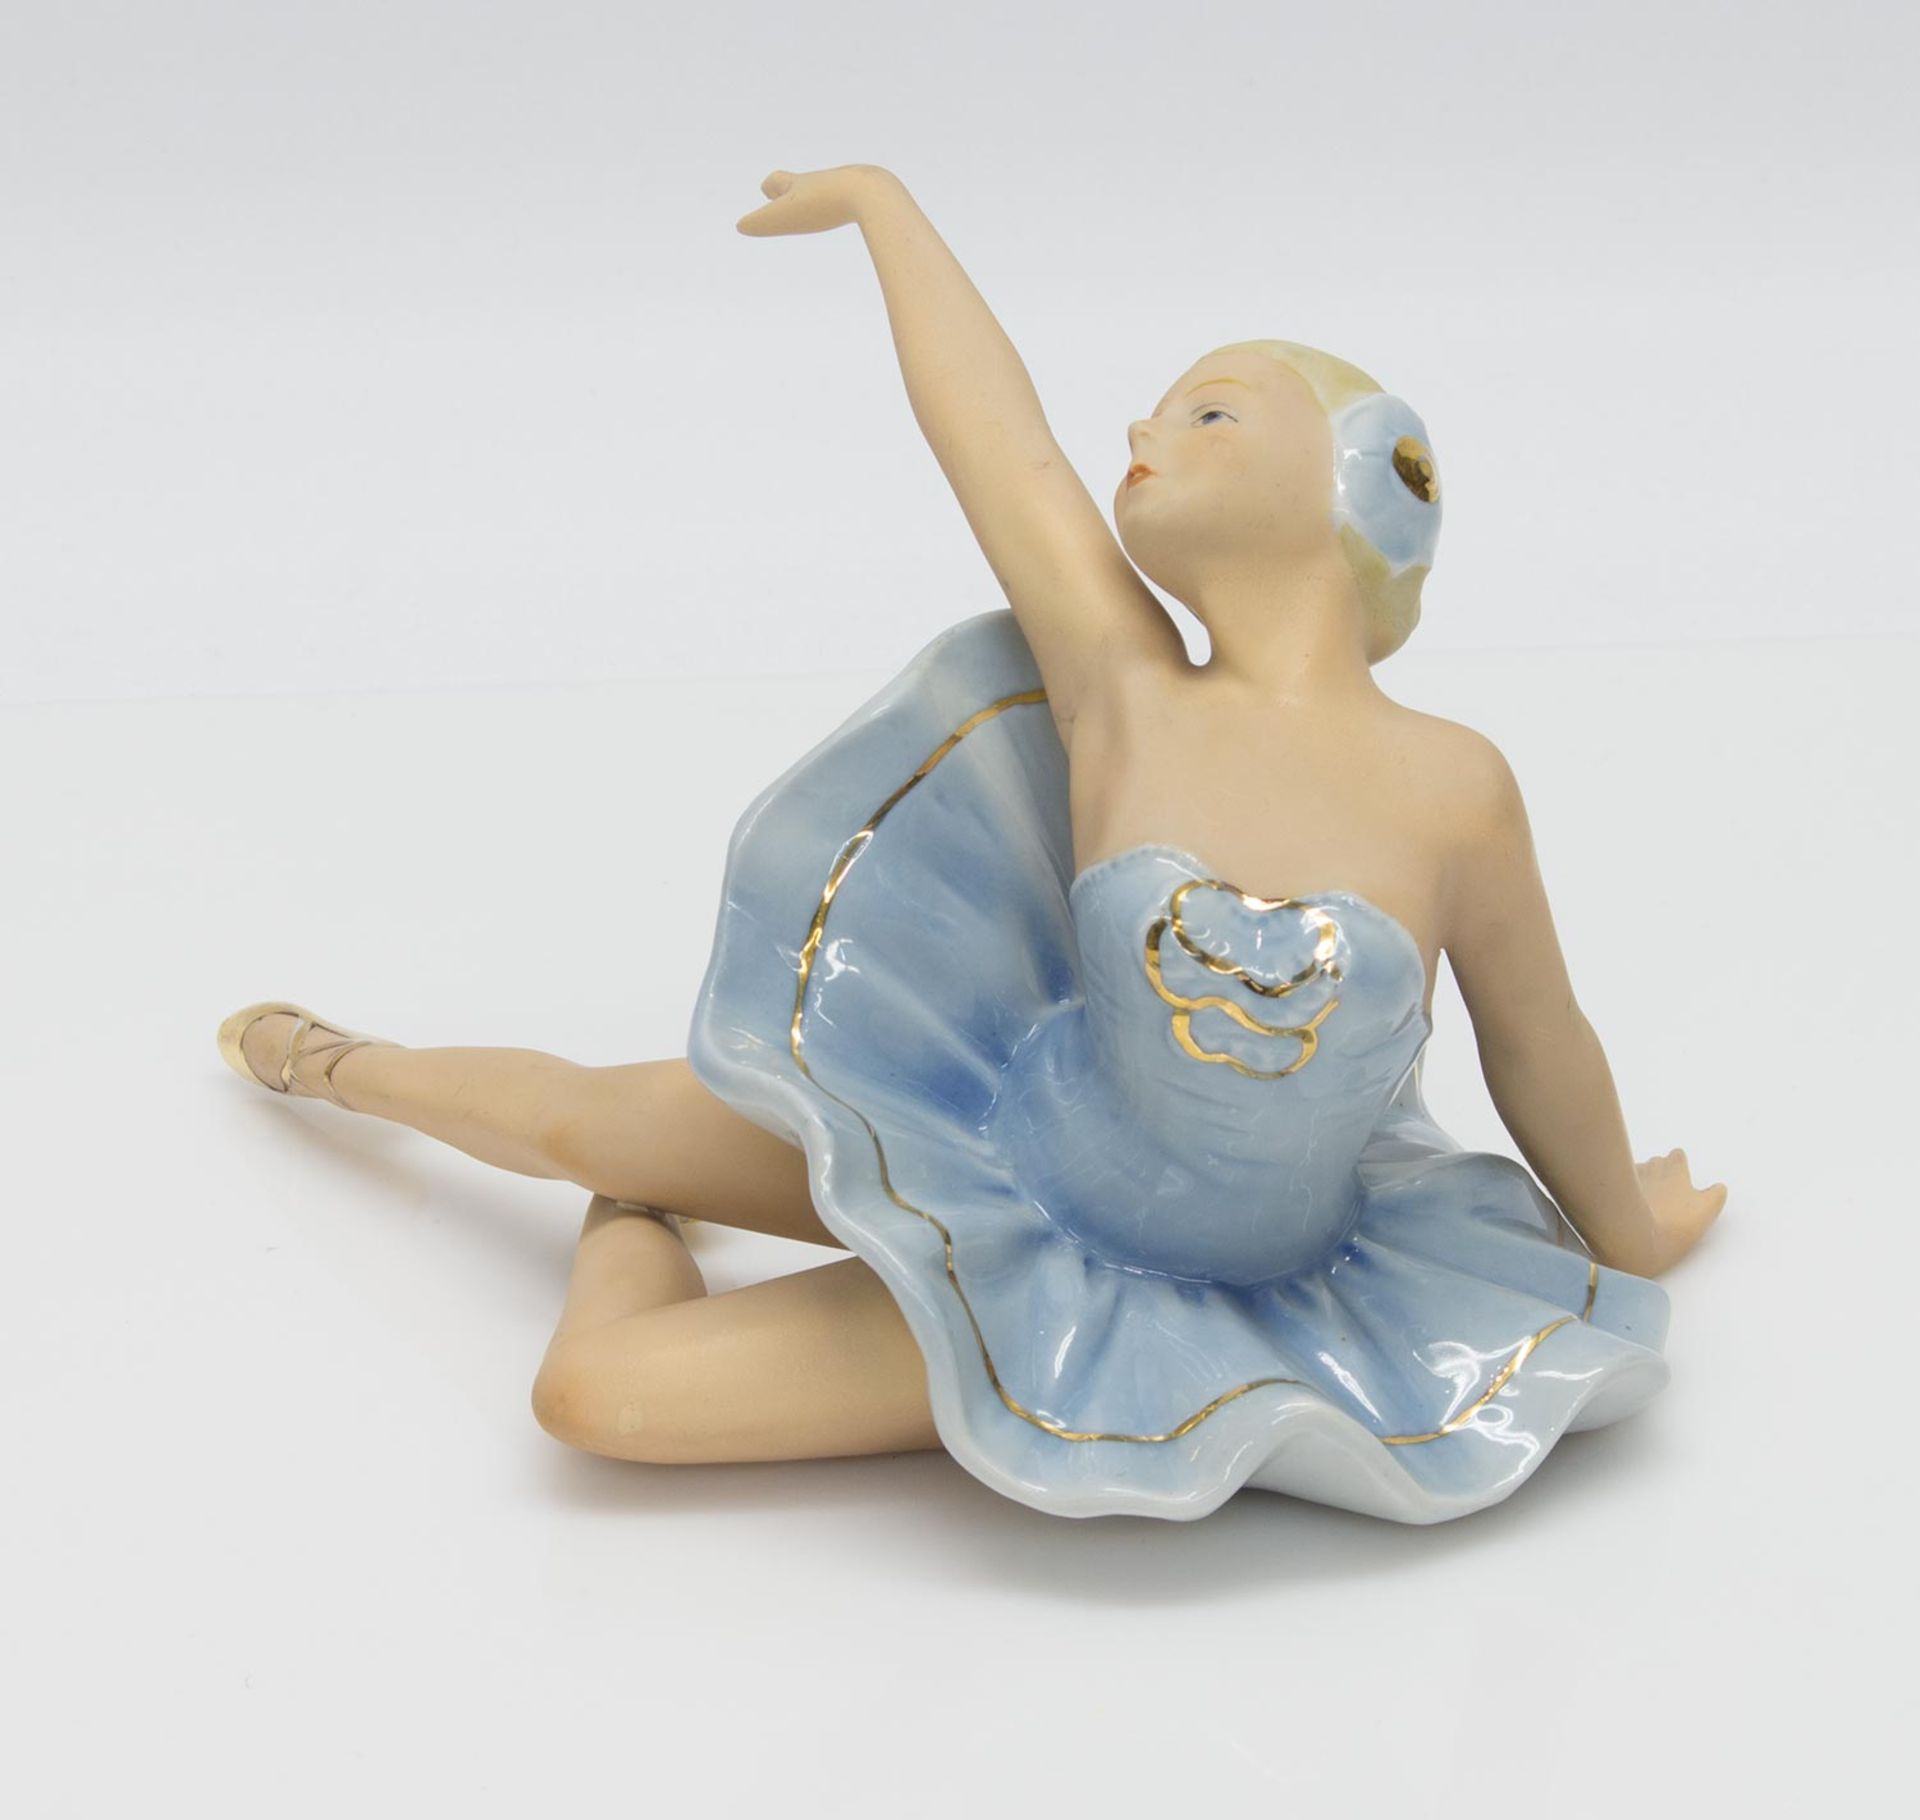 Ballerinagrazil sitzend, farbige Glasur m. Goldakzenten, H. 11,5 cm